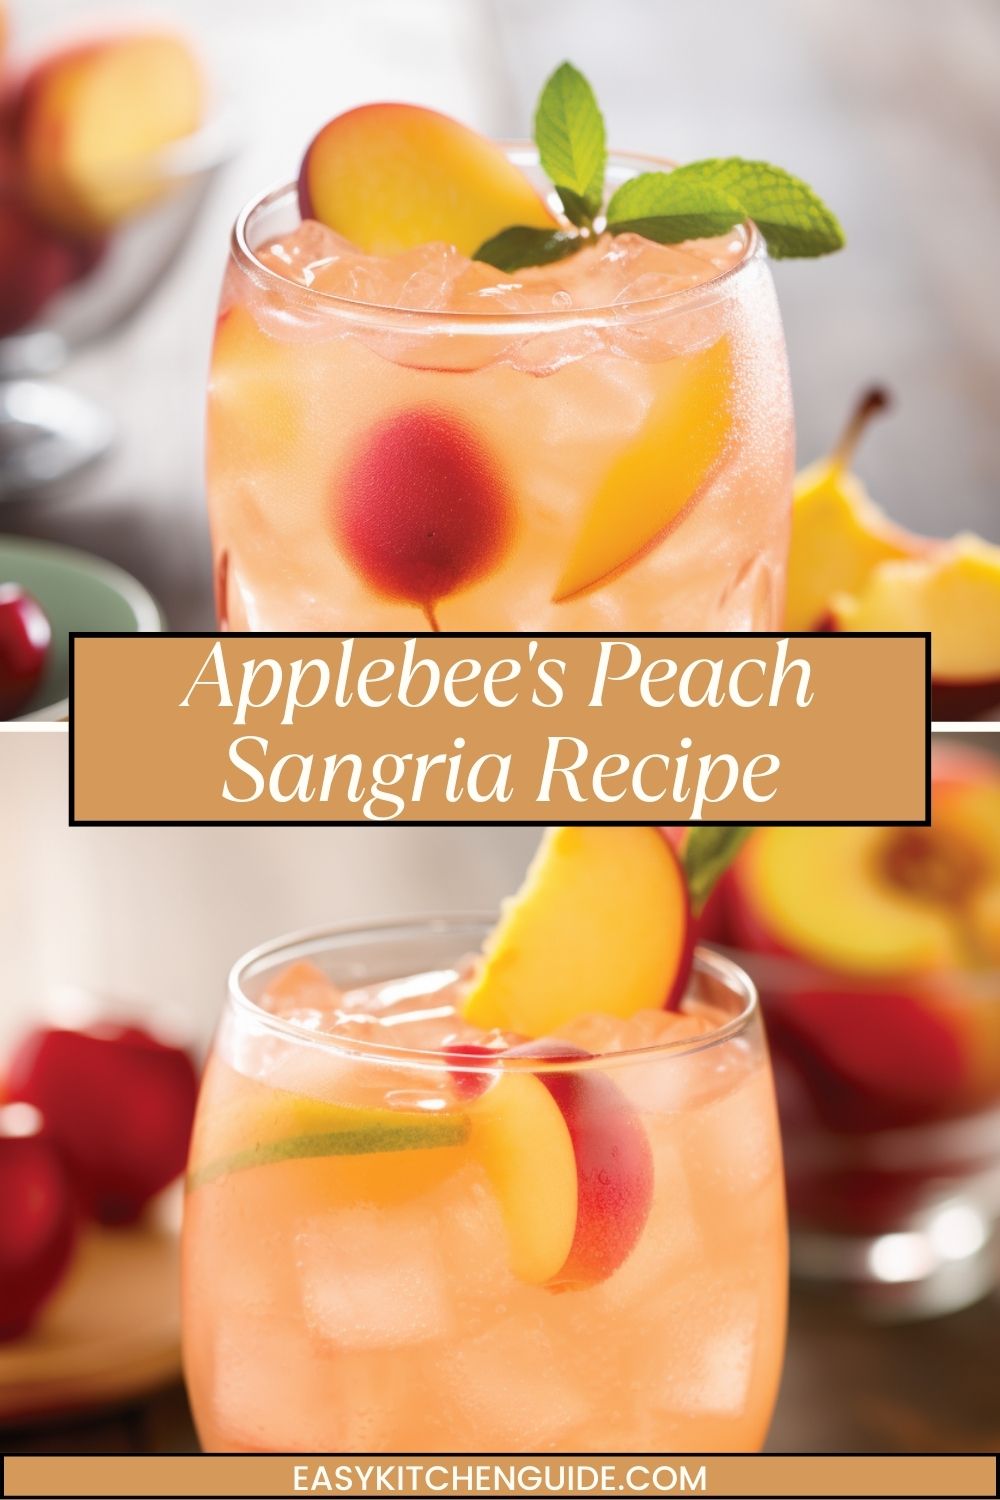 Applebee's Peach Sangria Recipe